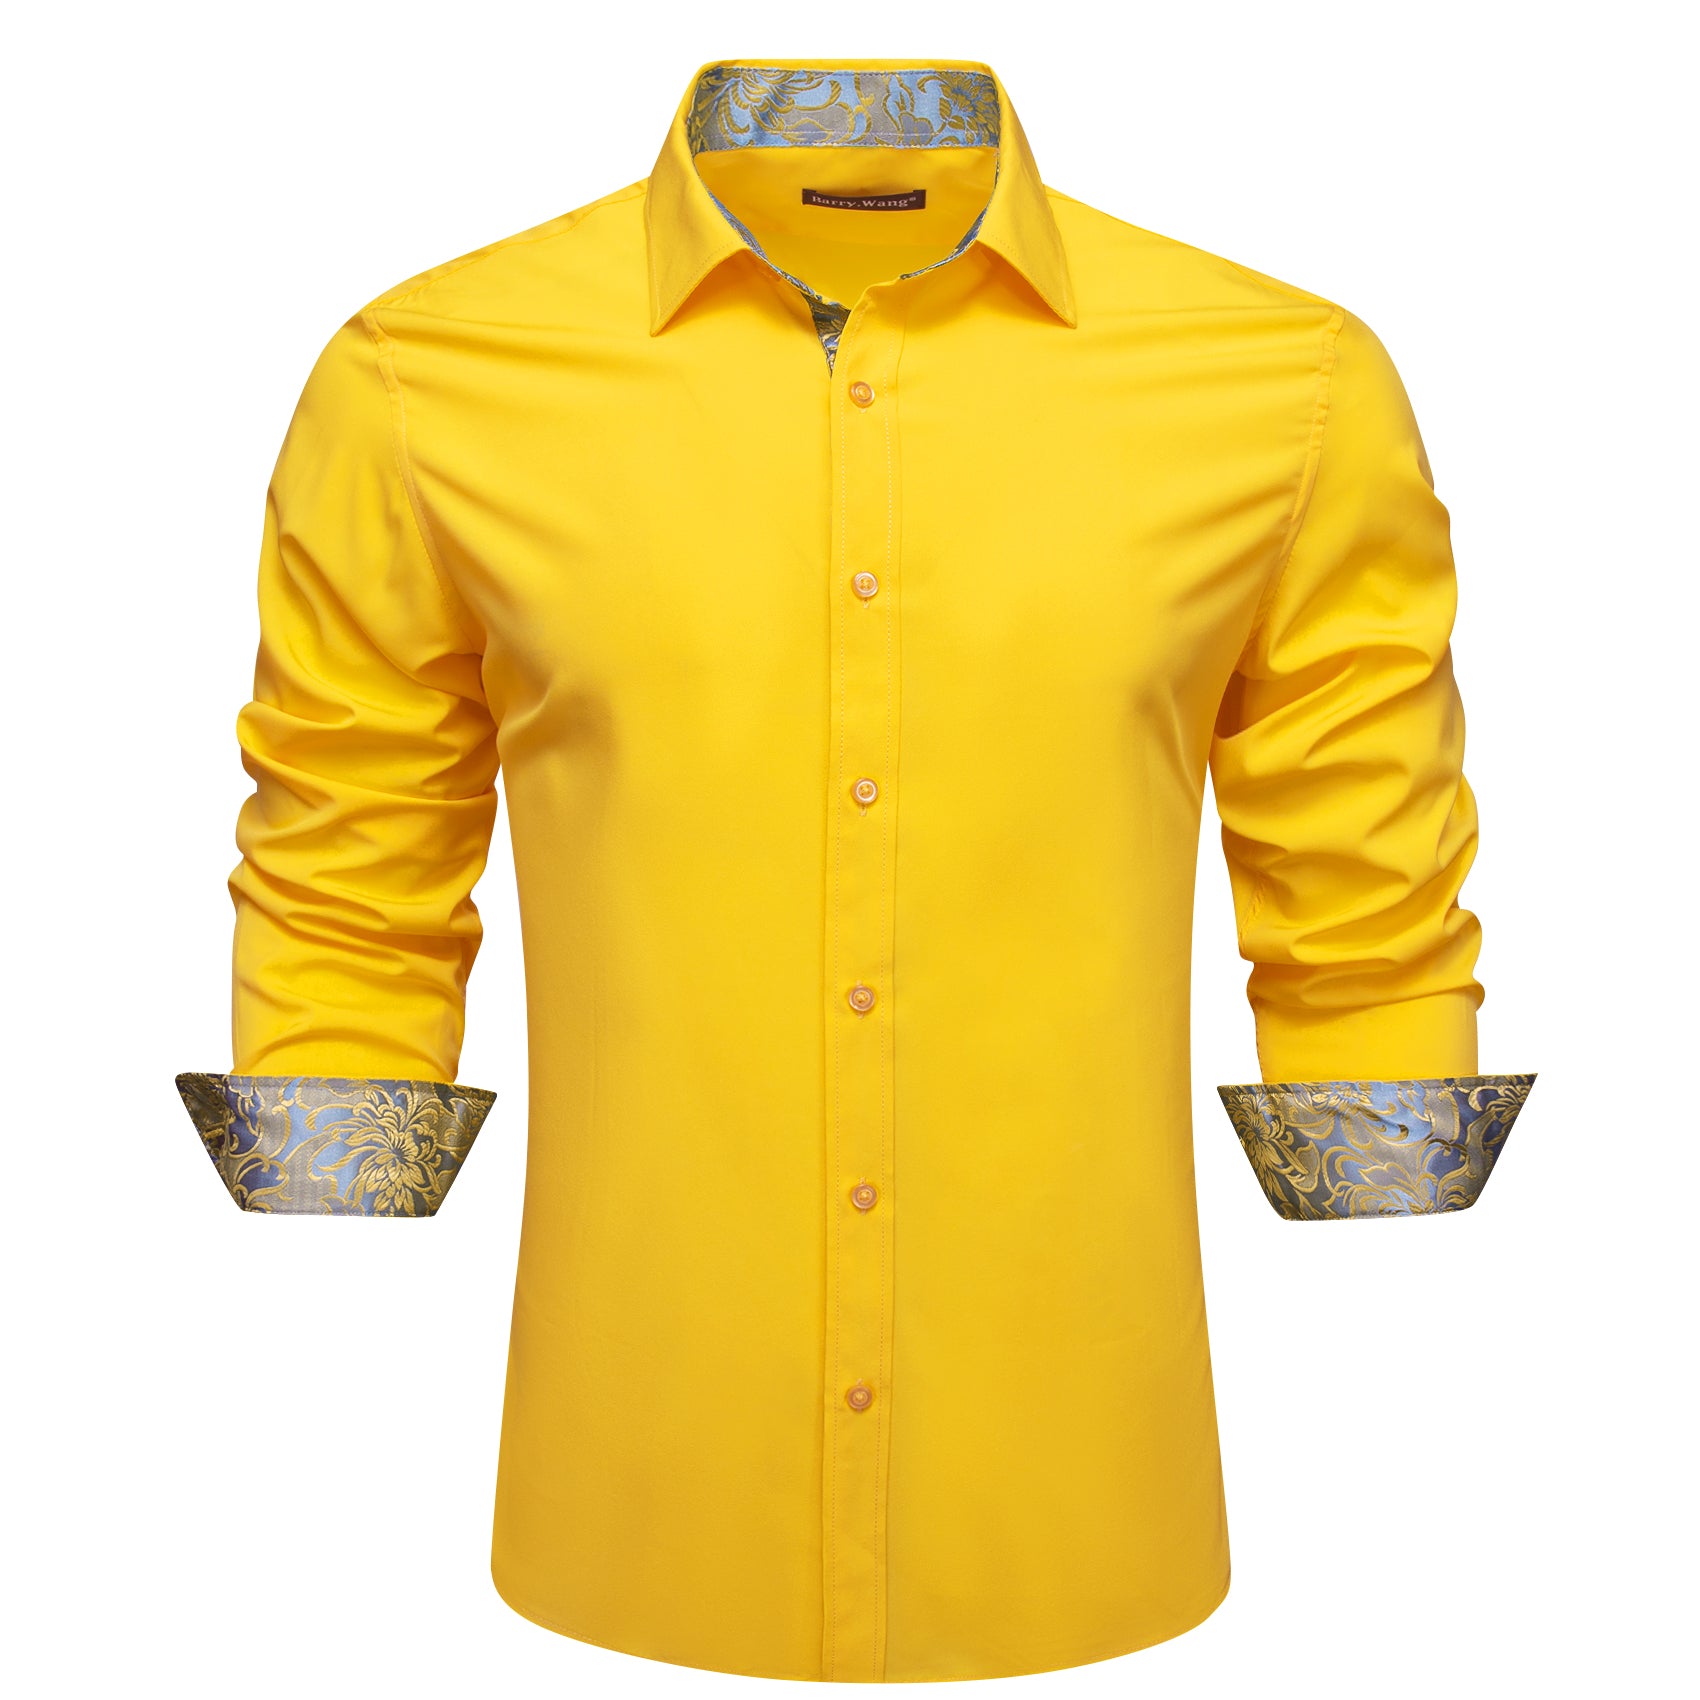 Barry.wang Formal Yellow Blue Splicing Men's Business Shirt